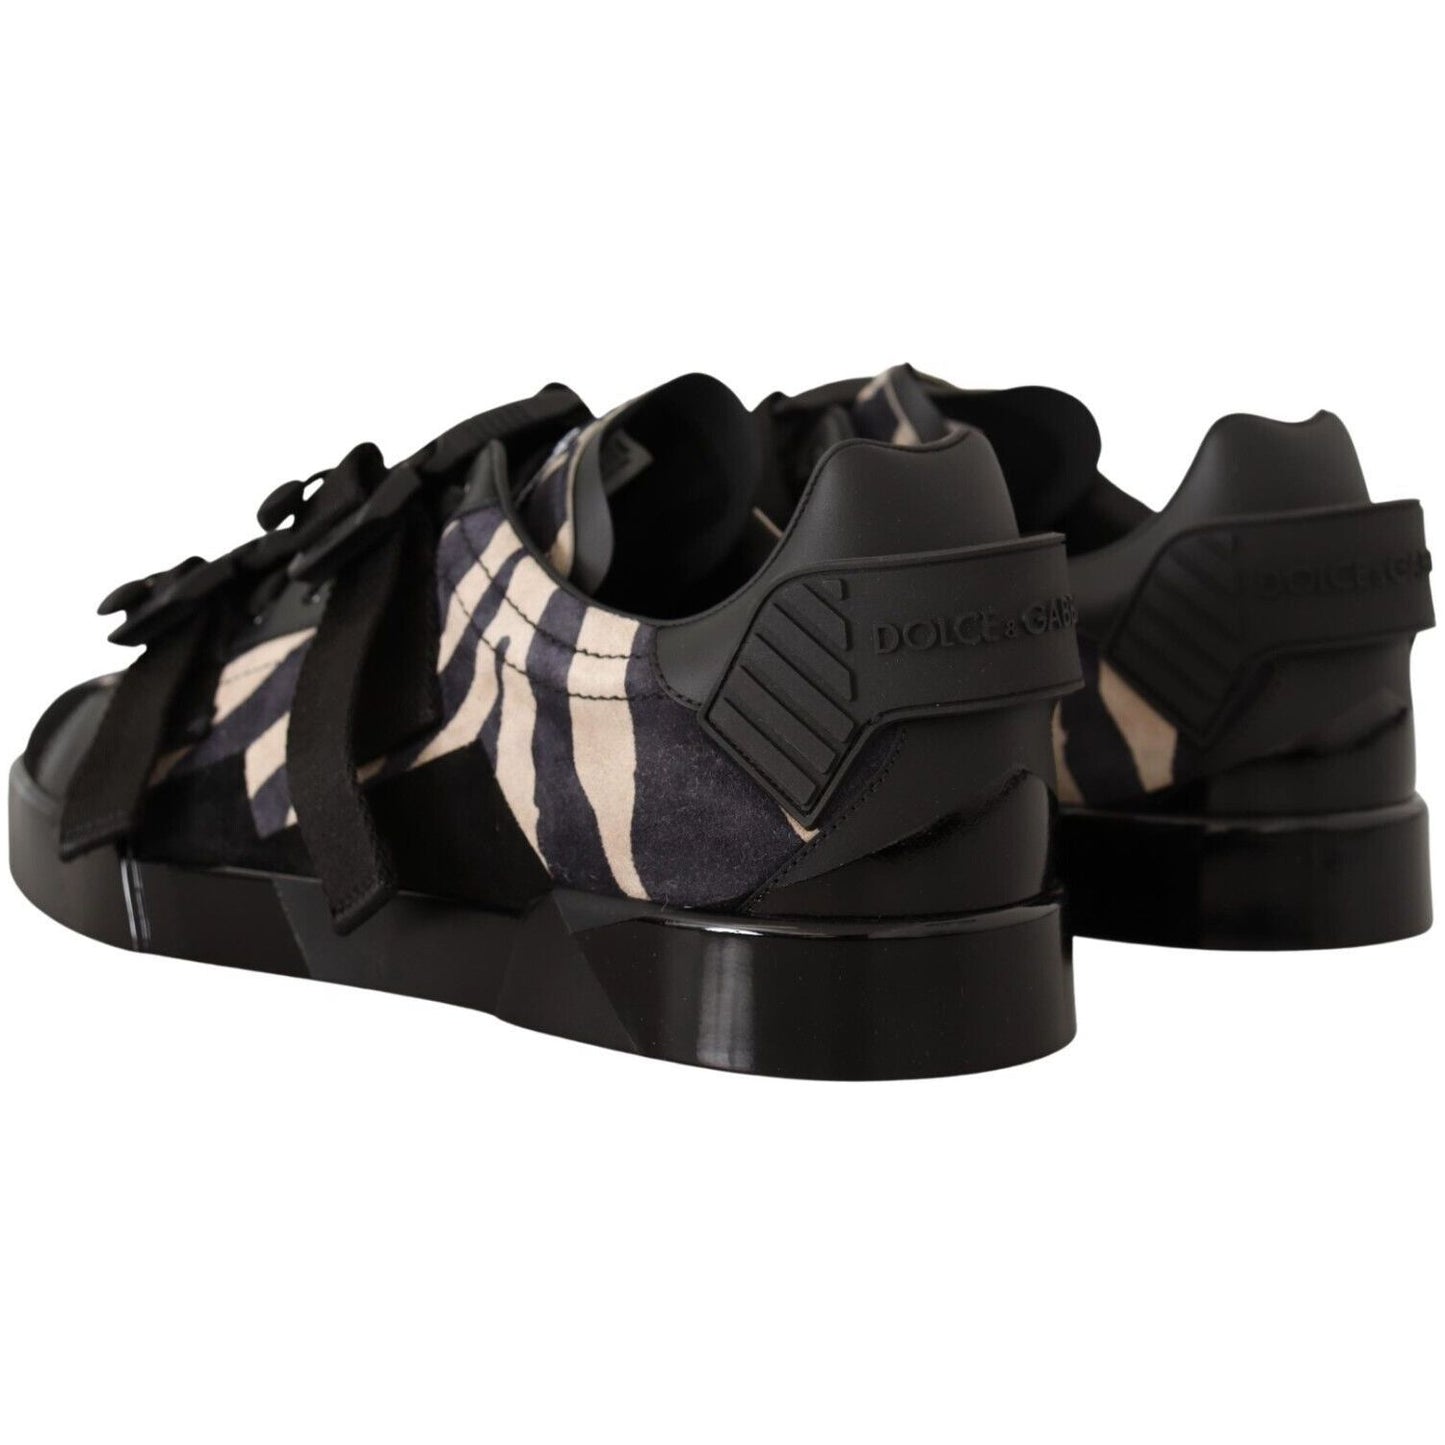 Dolce & Gabbana Zebra Suede Low Top Fashion Sneakers MAN SNEAKERS black-white-zebra-suede-rubber-sneakers-shoes-2